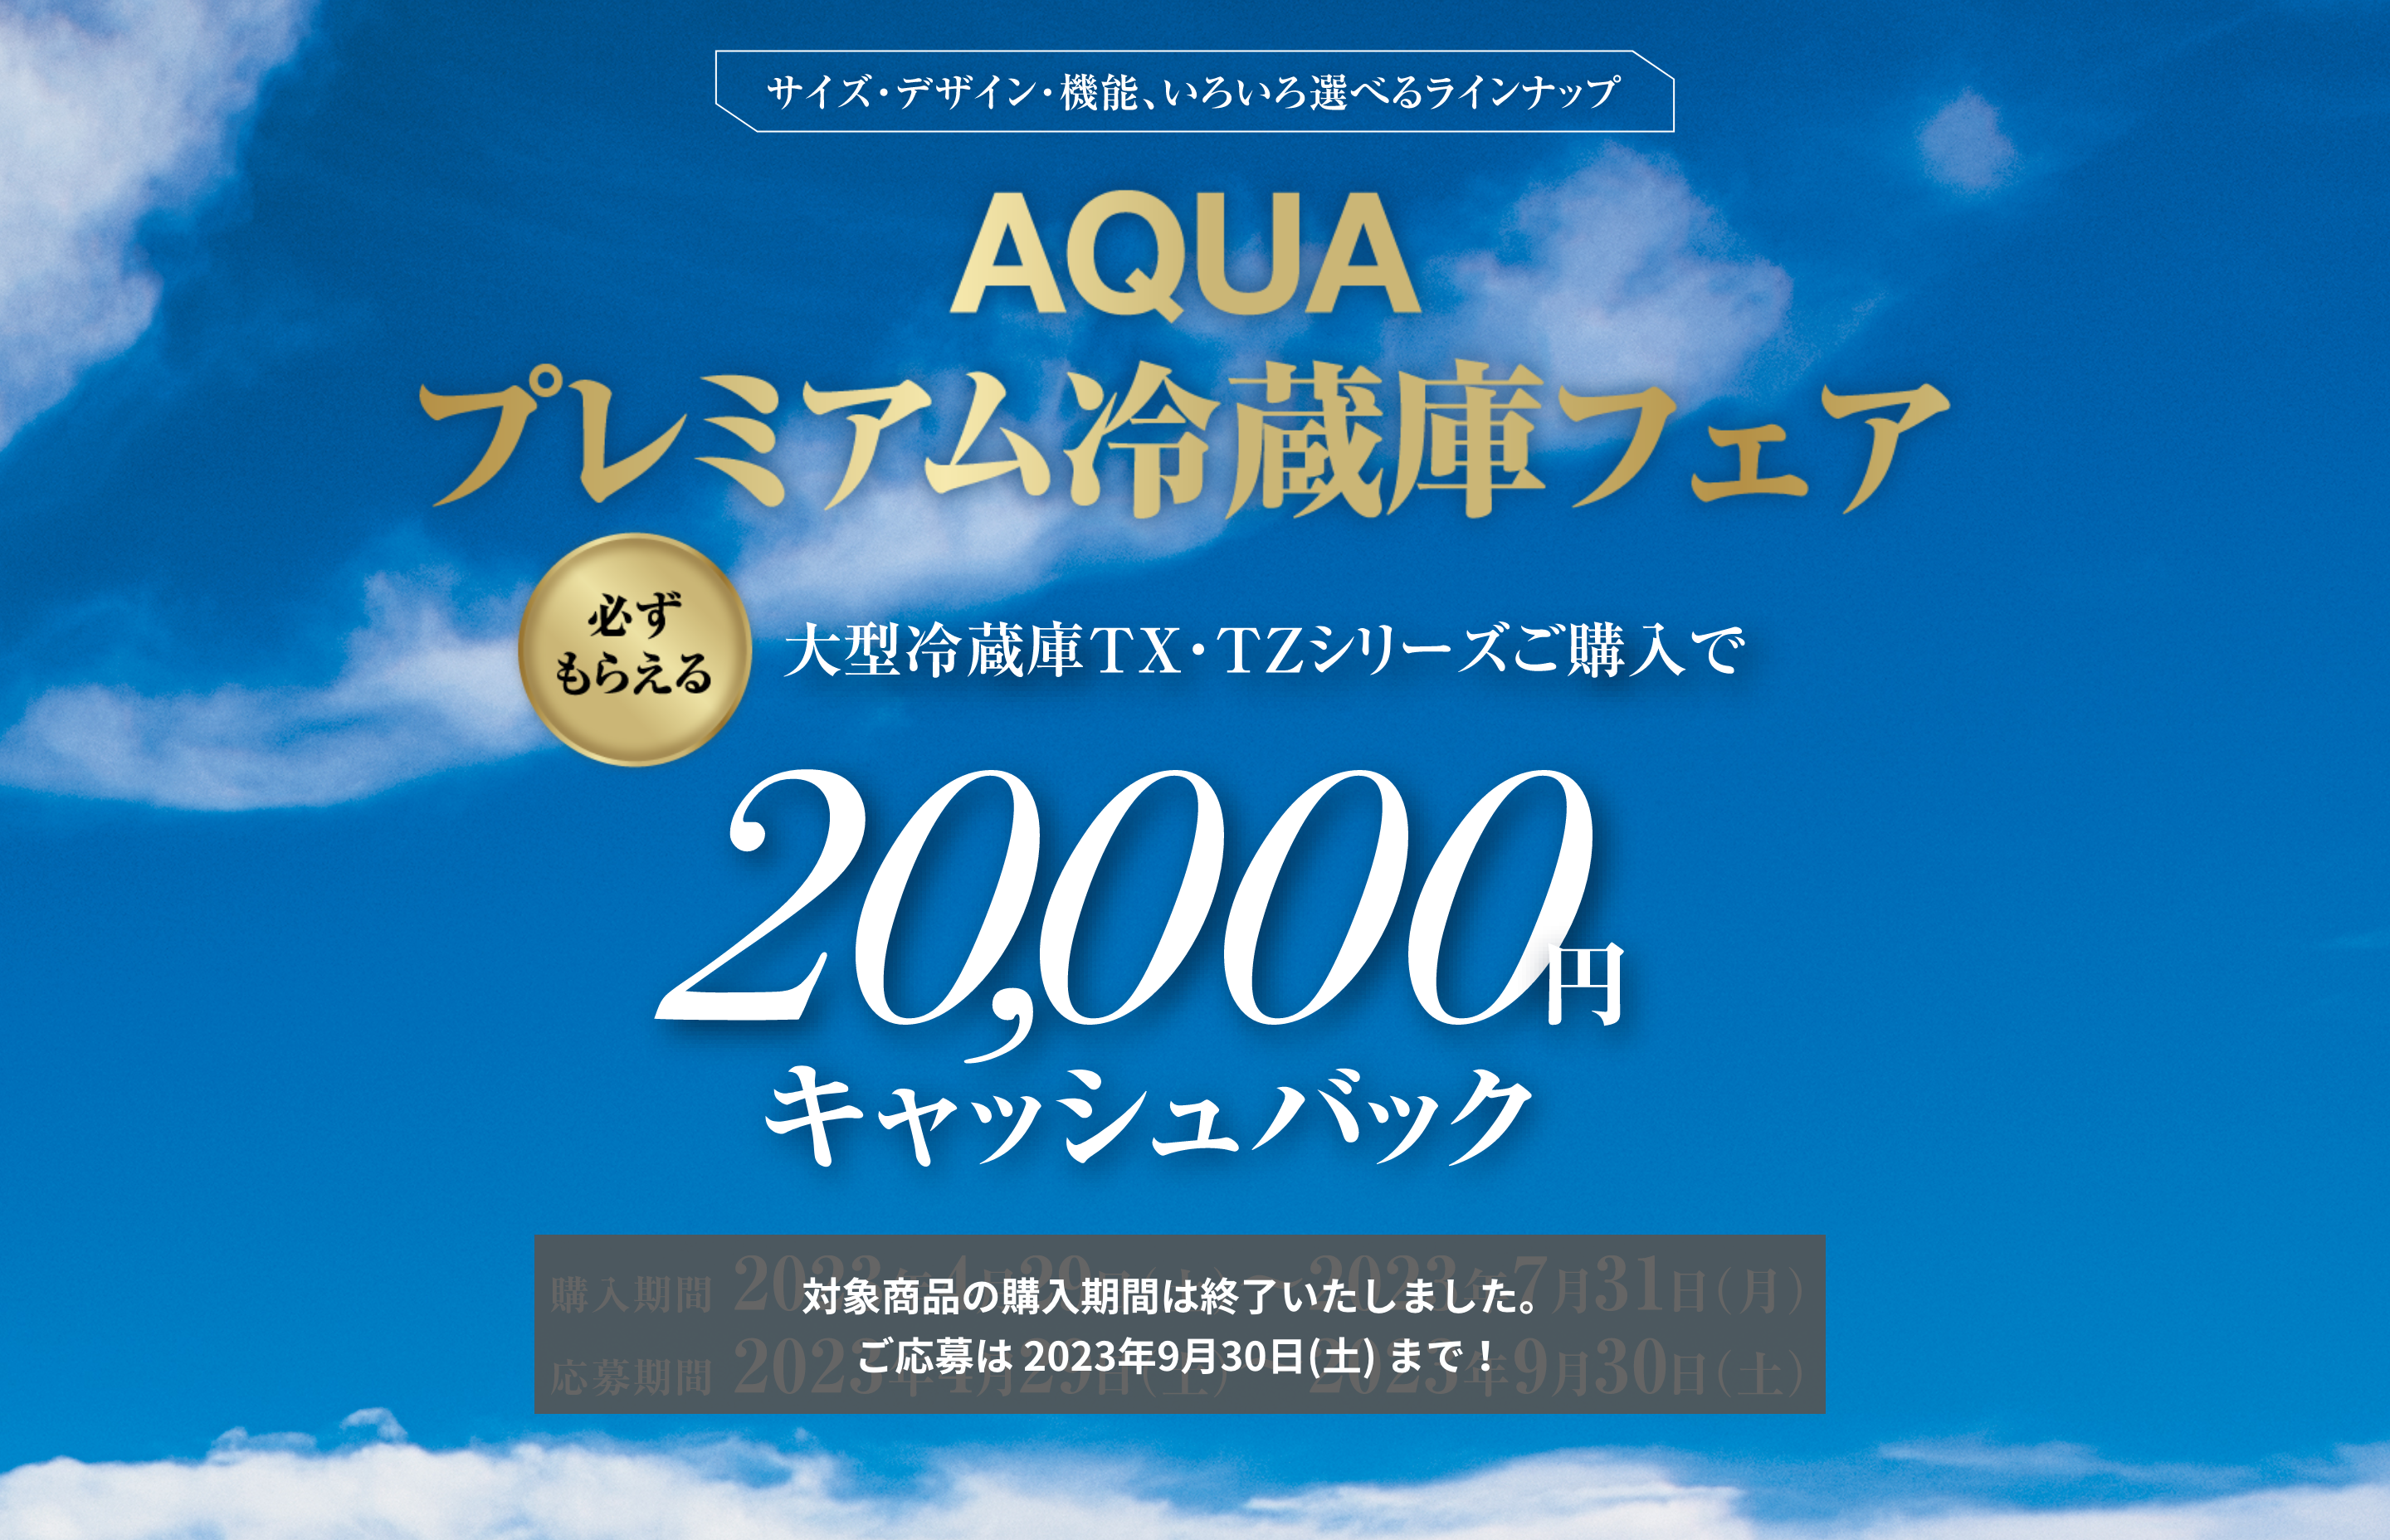 AQUA プレミアム冷蔵庫フェア 大型冷蔵庫TX・TZシリーズご購入で20,000円キャッシュバック